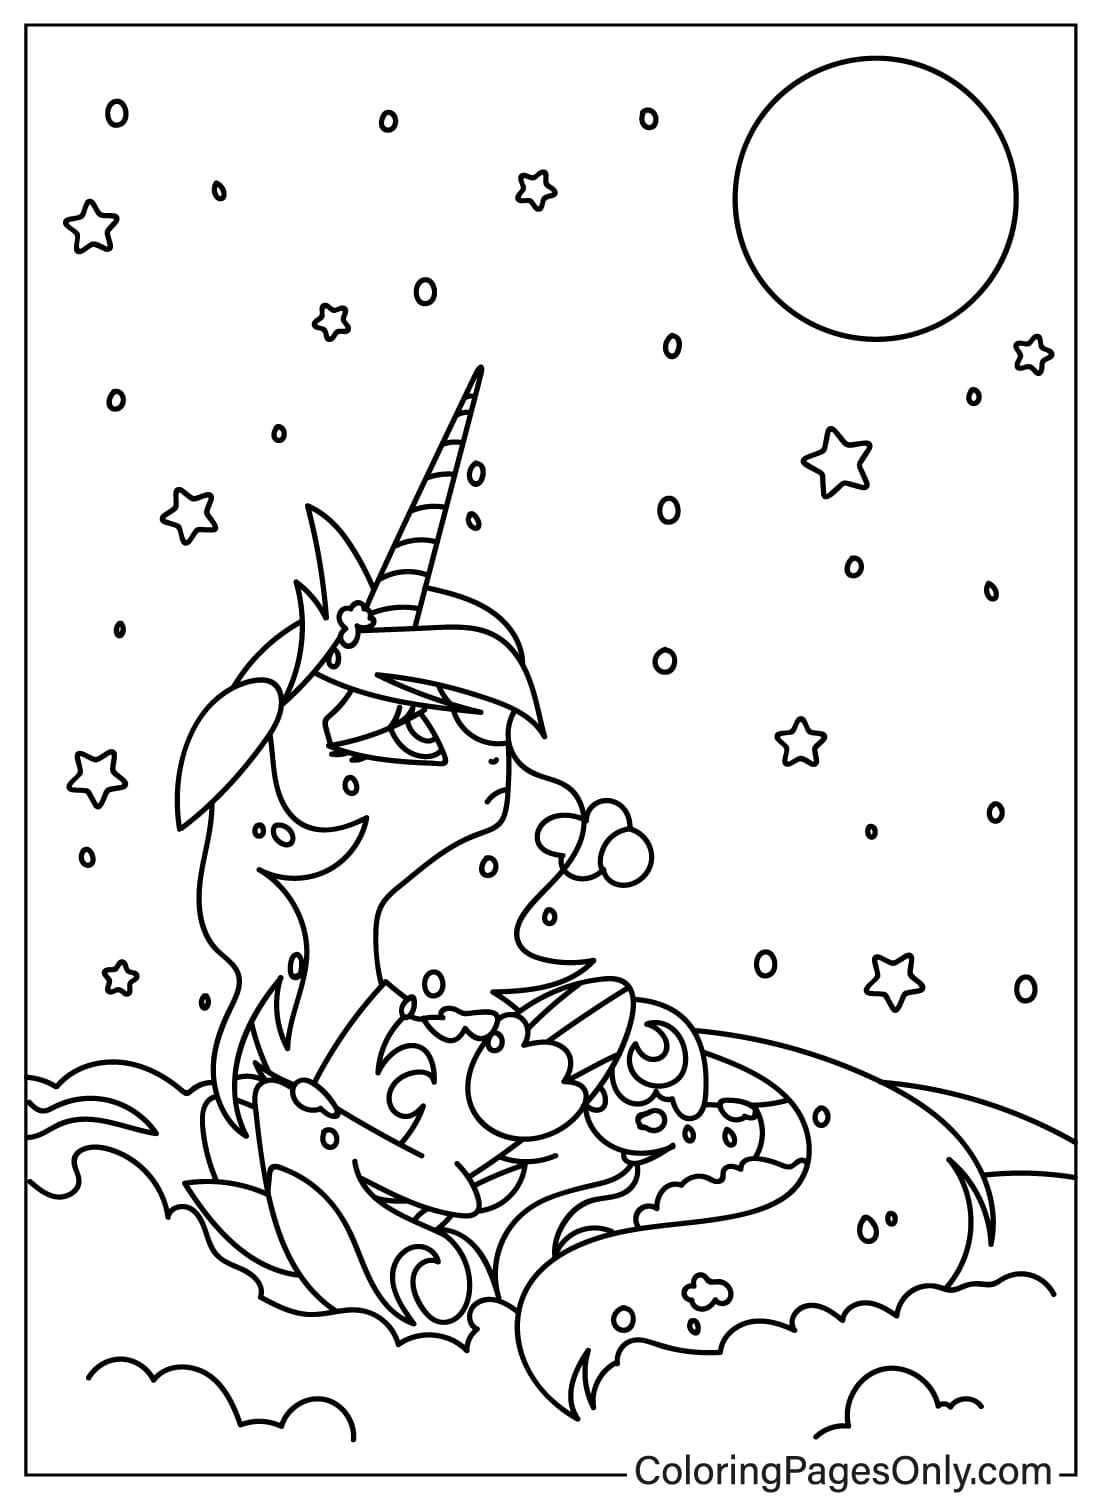 La princesse Luna est allongée sur le nuage et regarde la lune depuis la princesse Luna